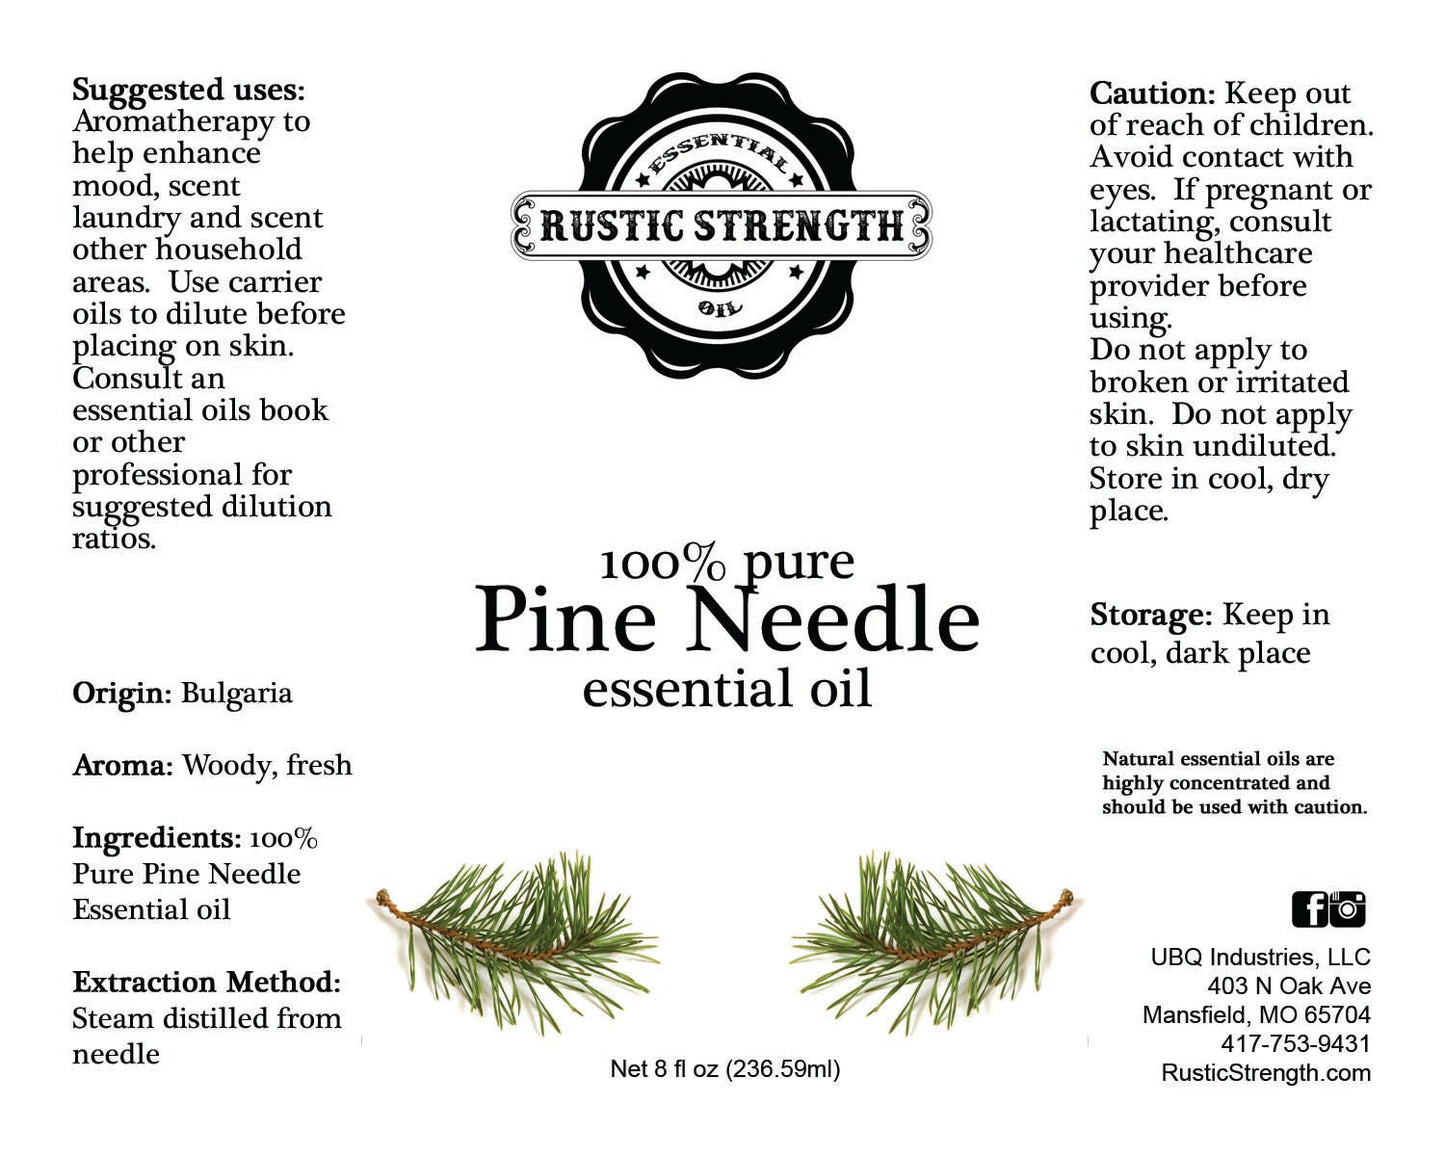 Pine Needle Essential Oil - 16oz